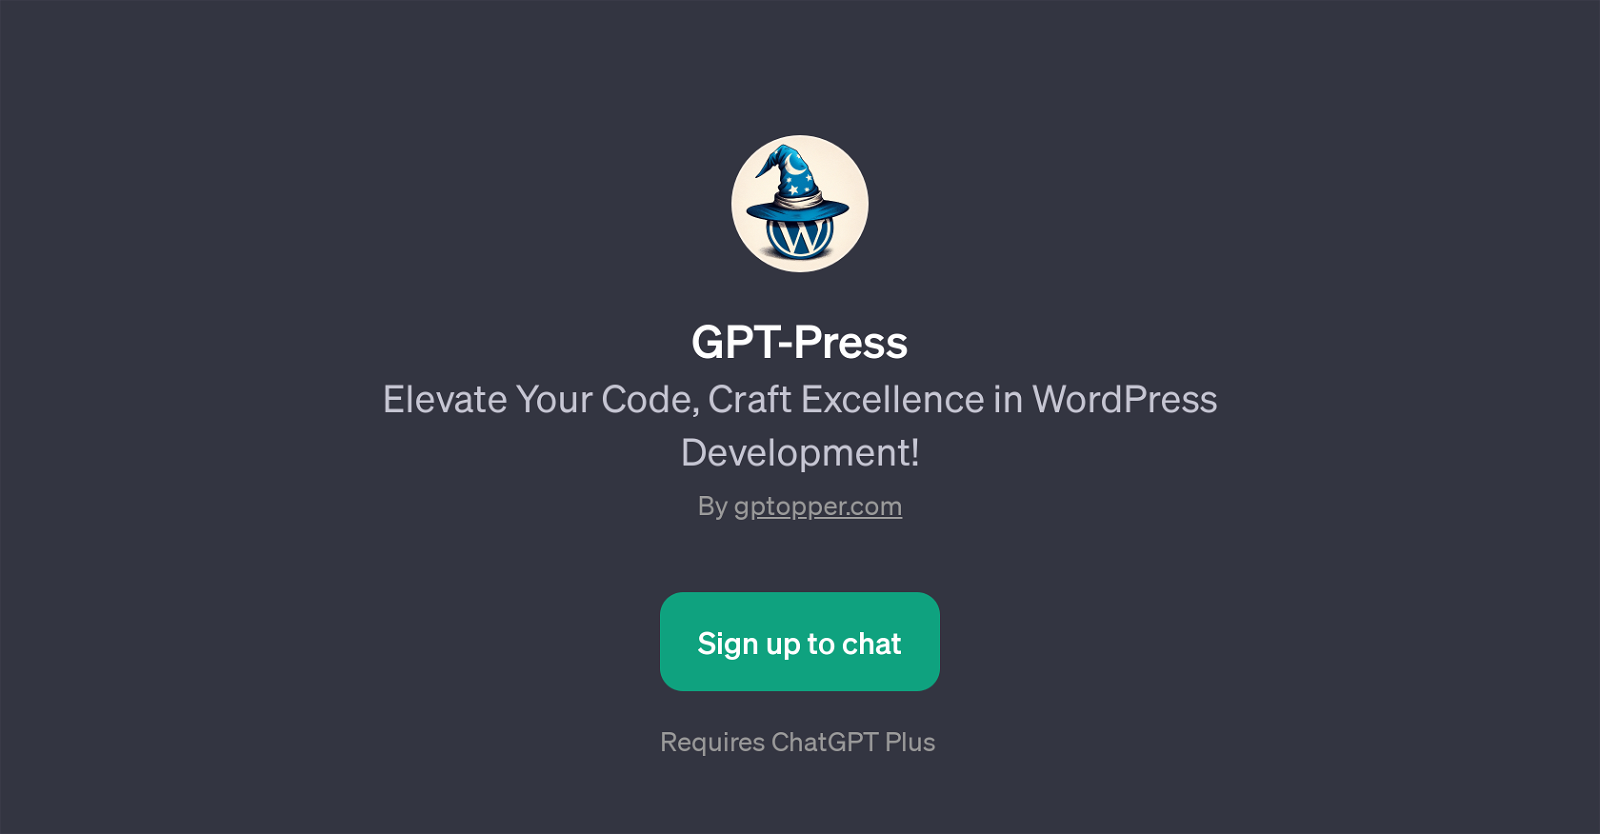 GPT-Press website